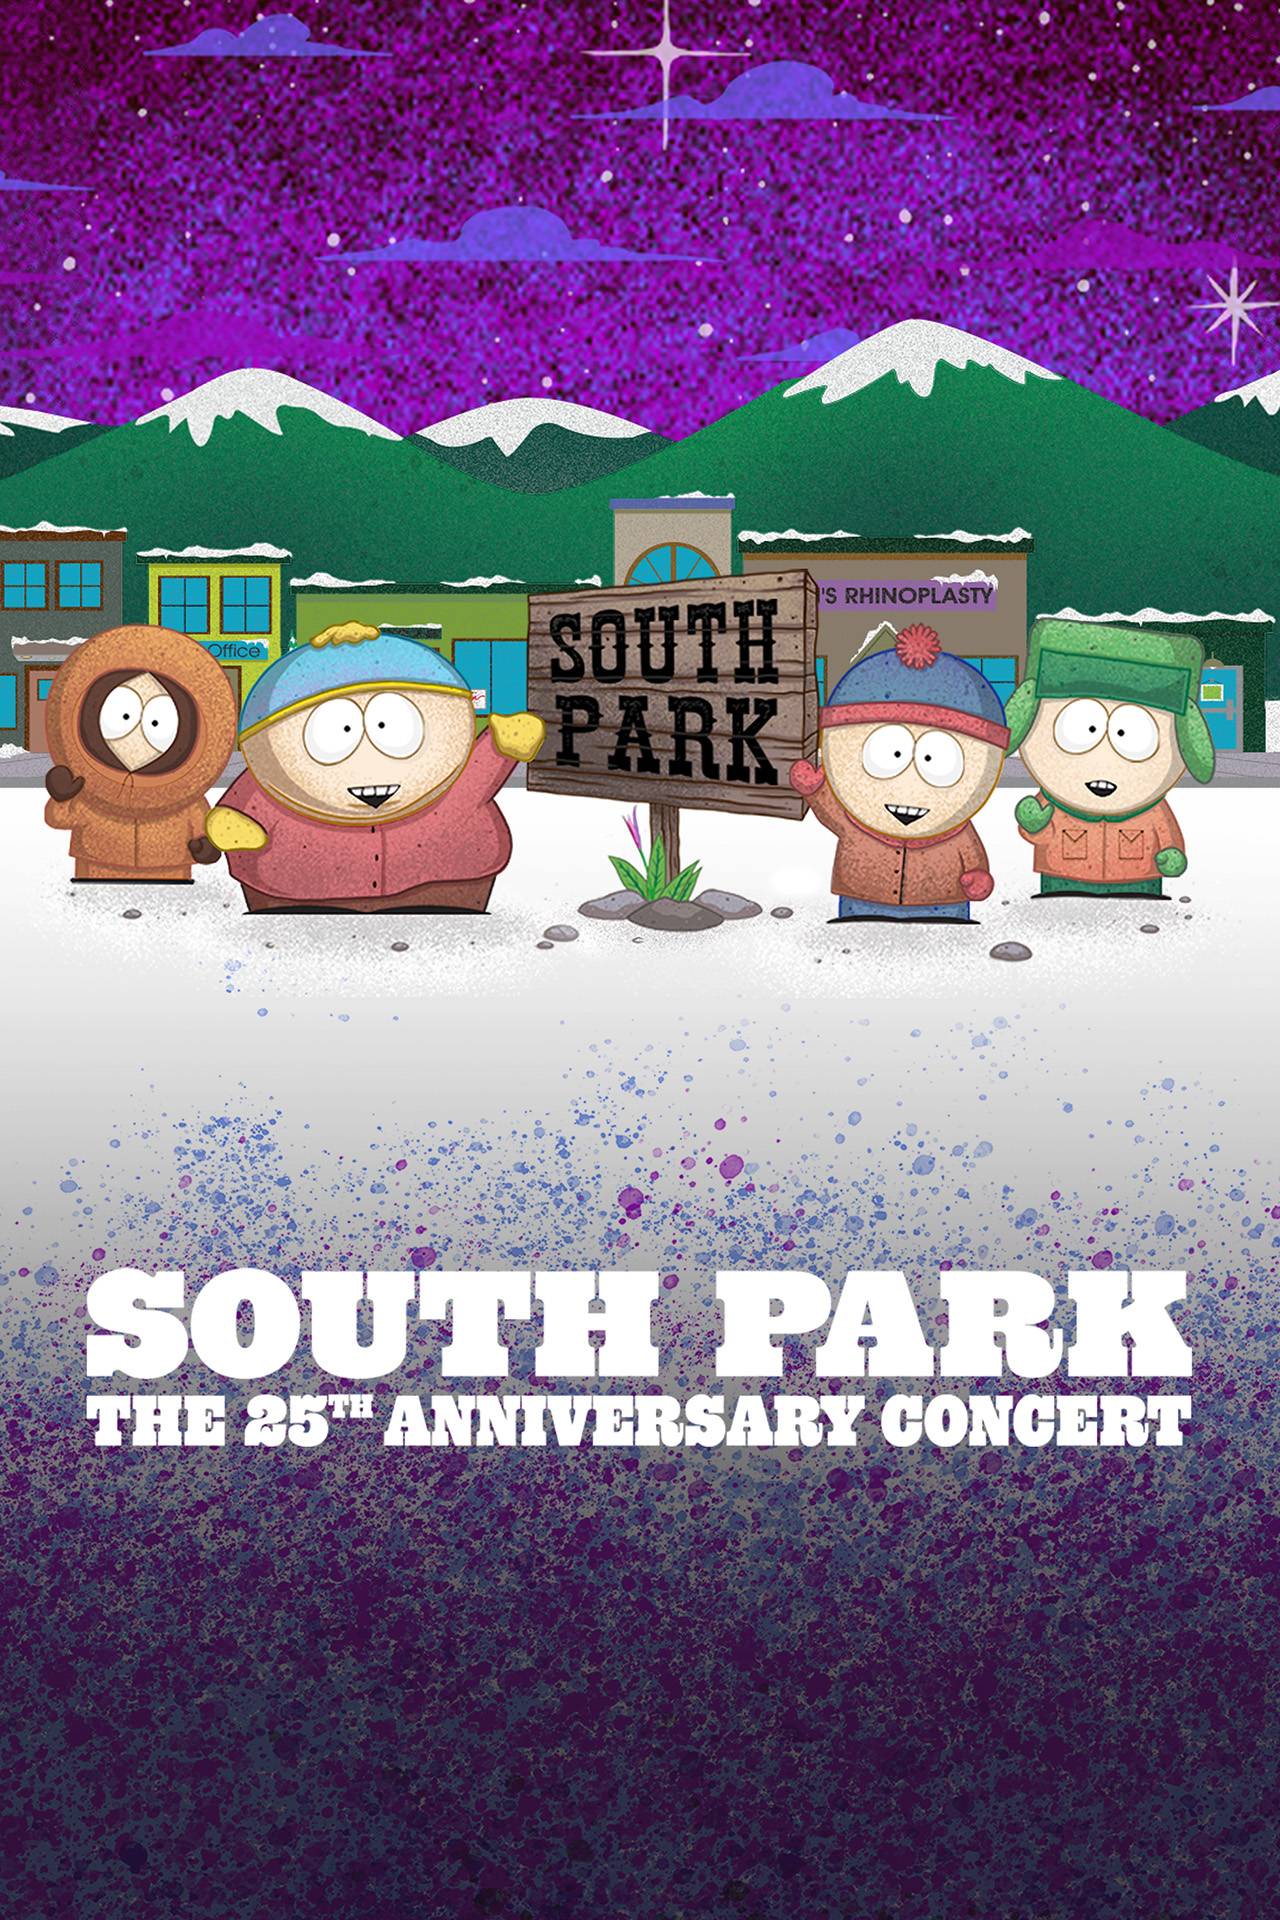 South Park - TV Series | South Park Studios Global